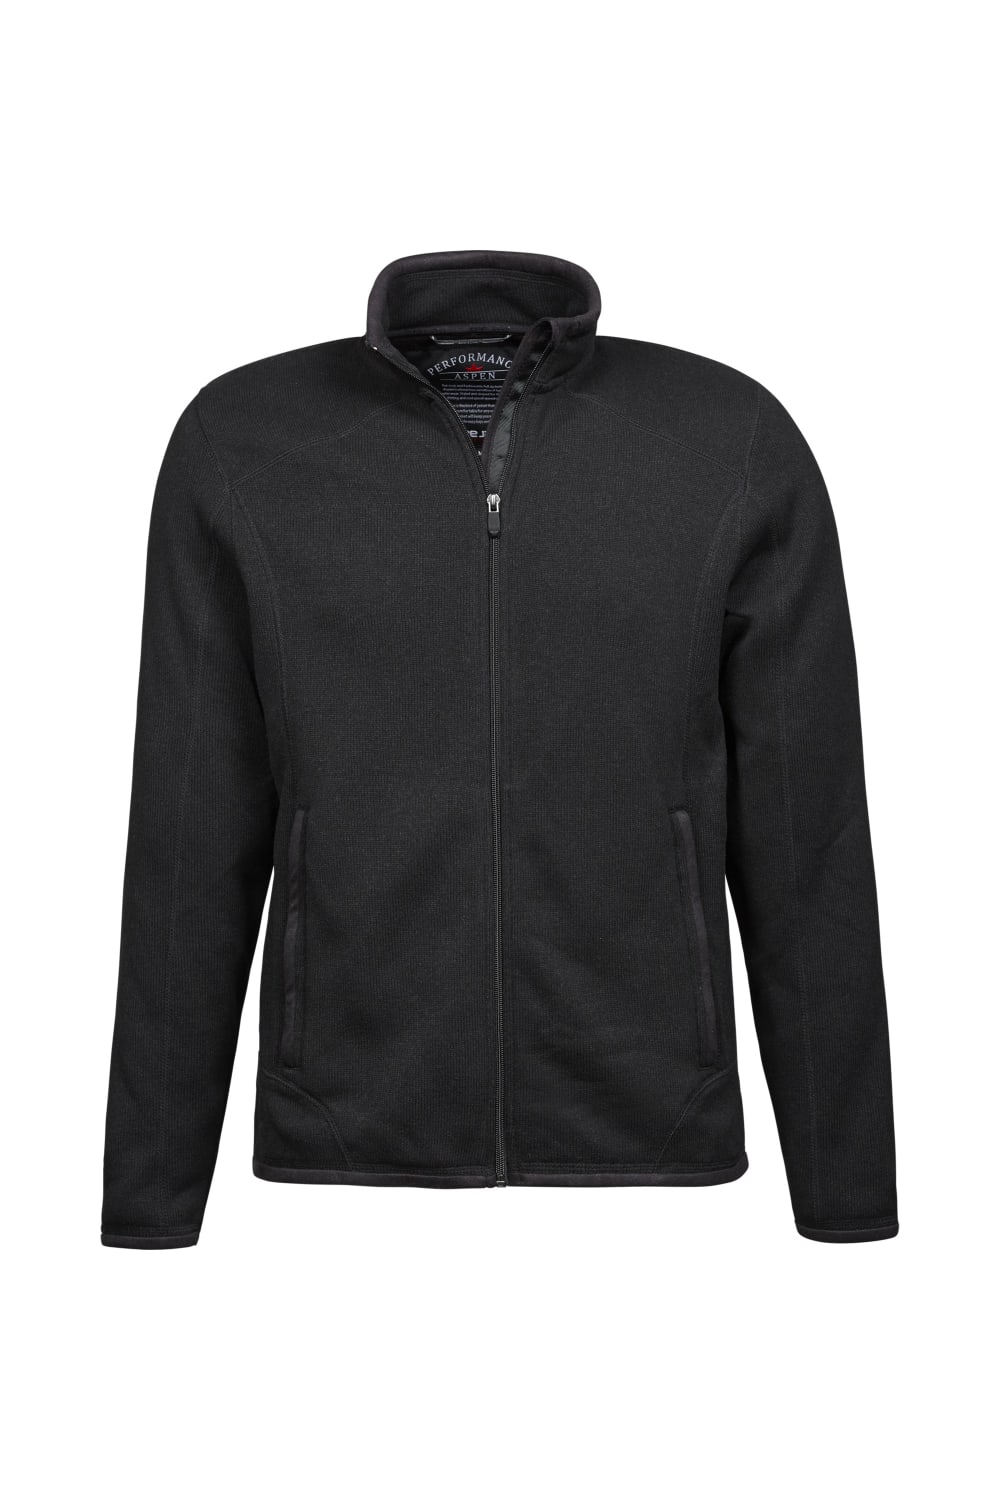 Tee Jays Mens Knitted Outdoor Fleece Jacket (Black)